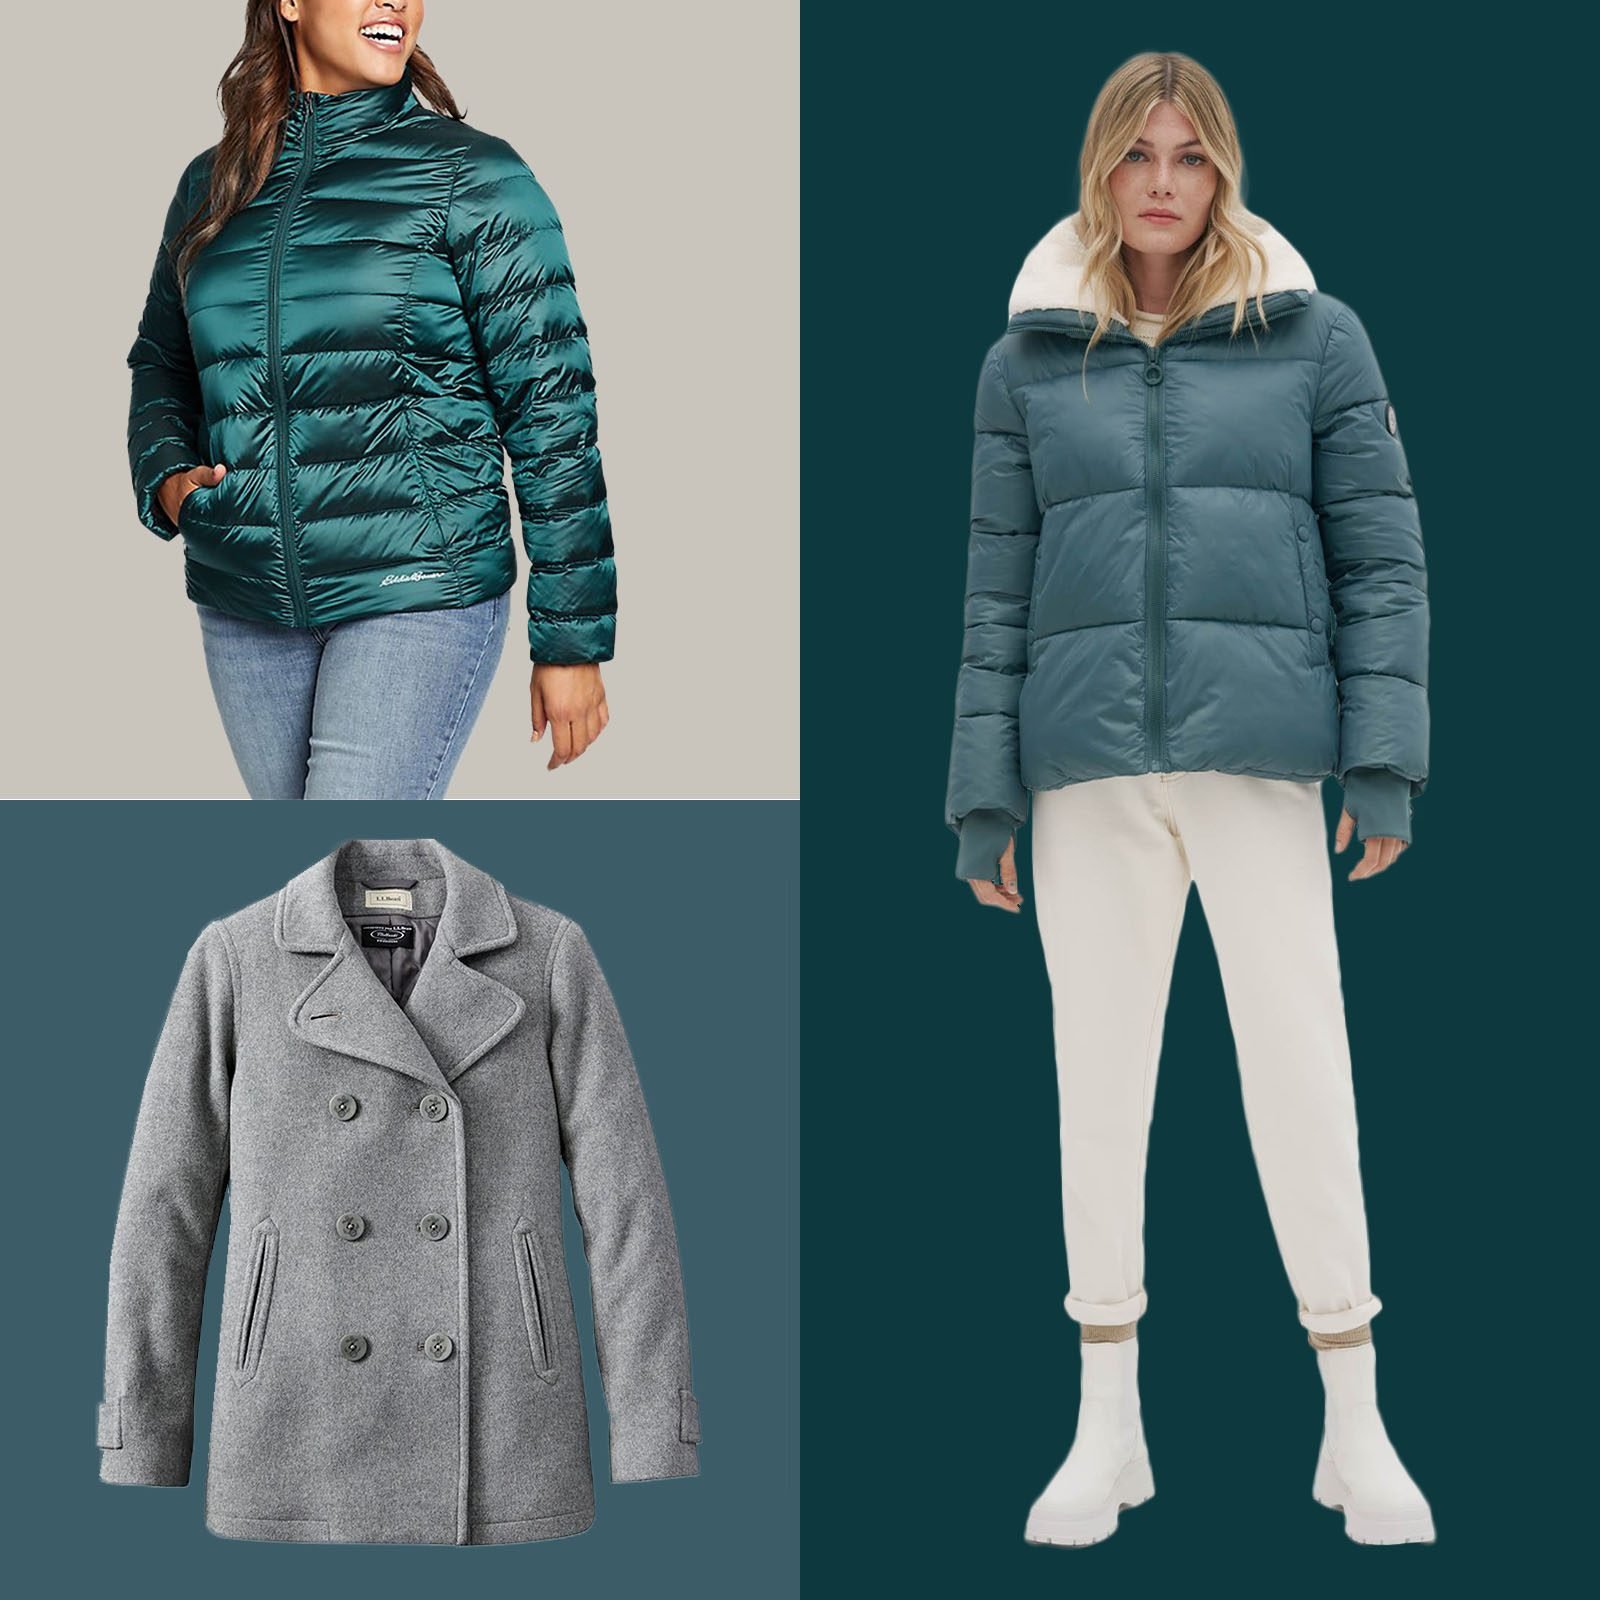 Hot Mens Luxury Faux Mink Fur Warm Winter Coat Jacket Hooded ZIP Overcoat Parka 